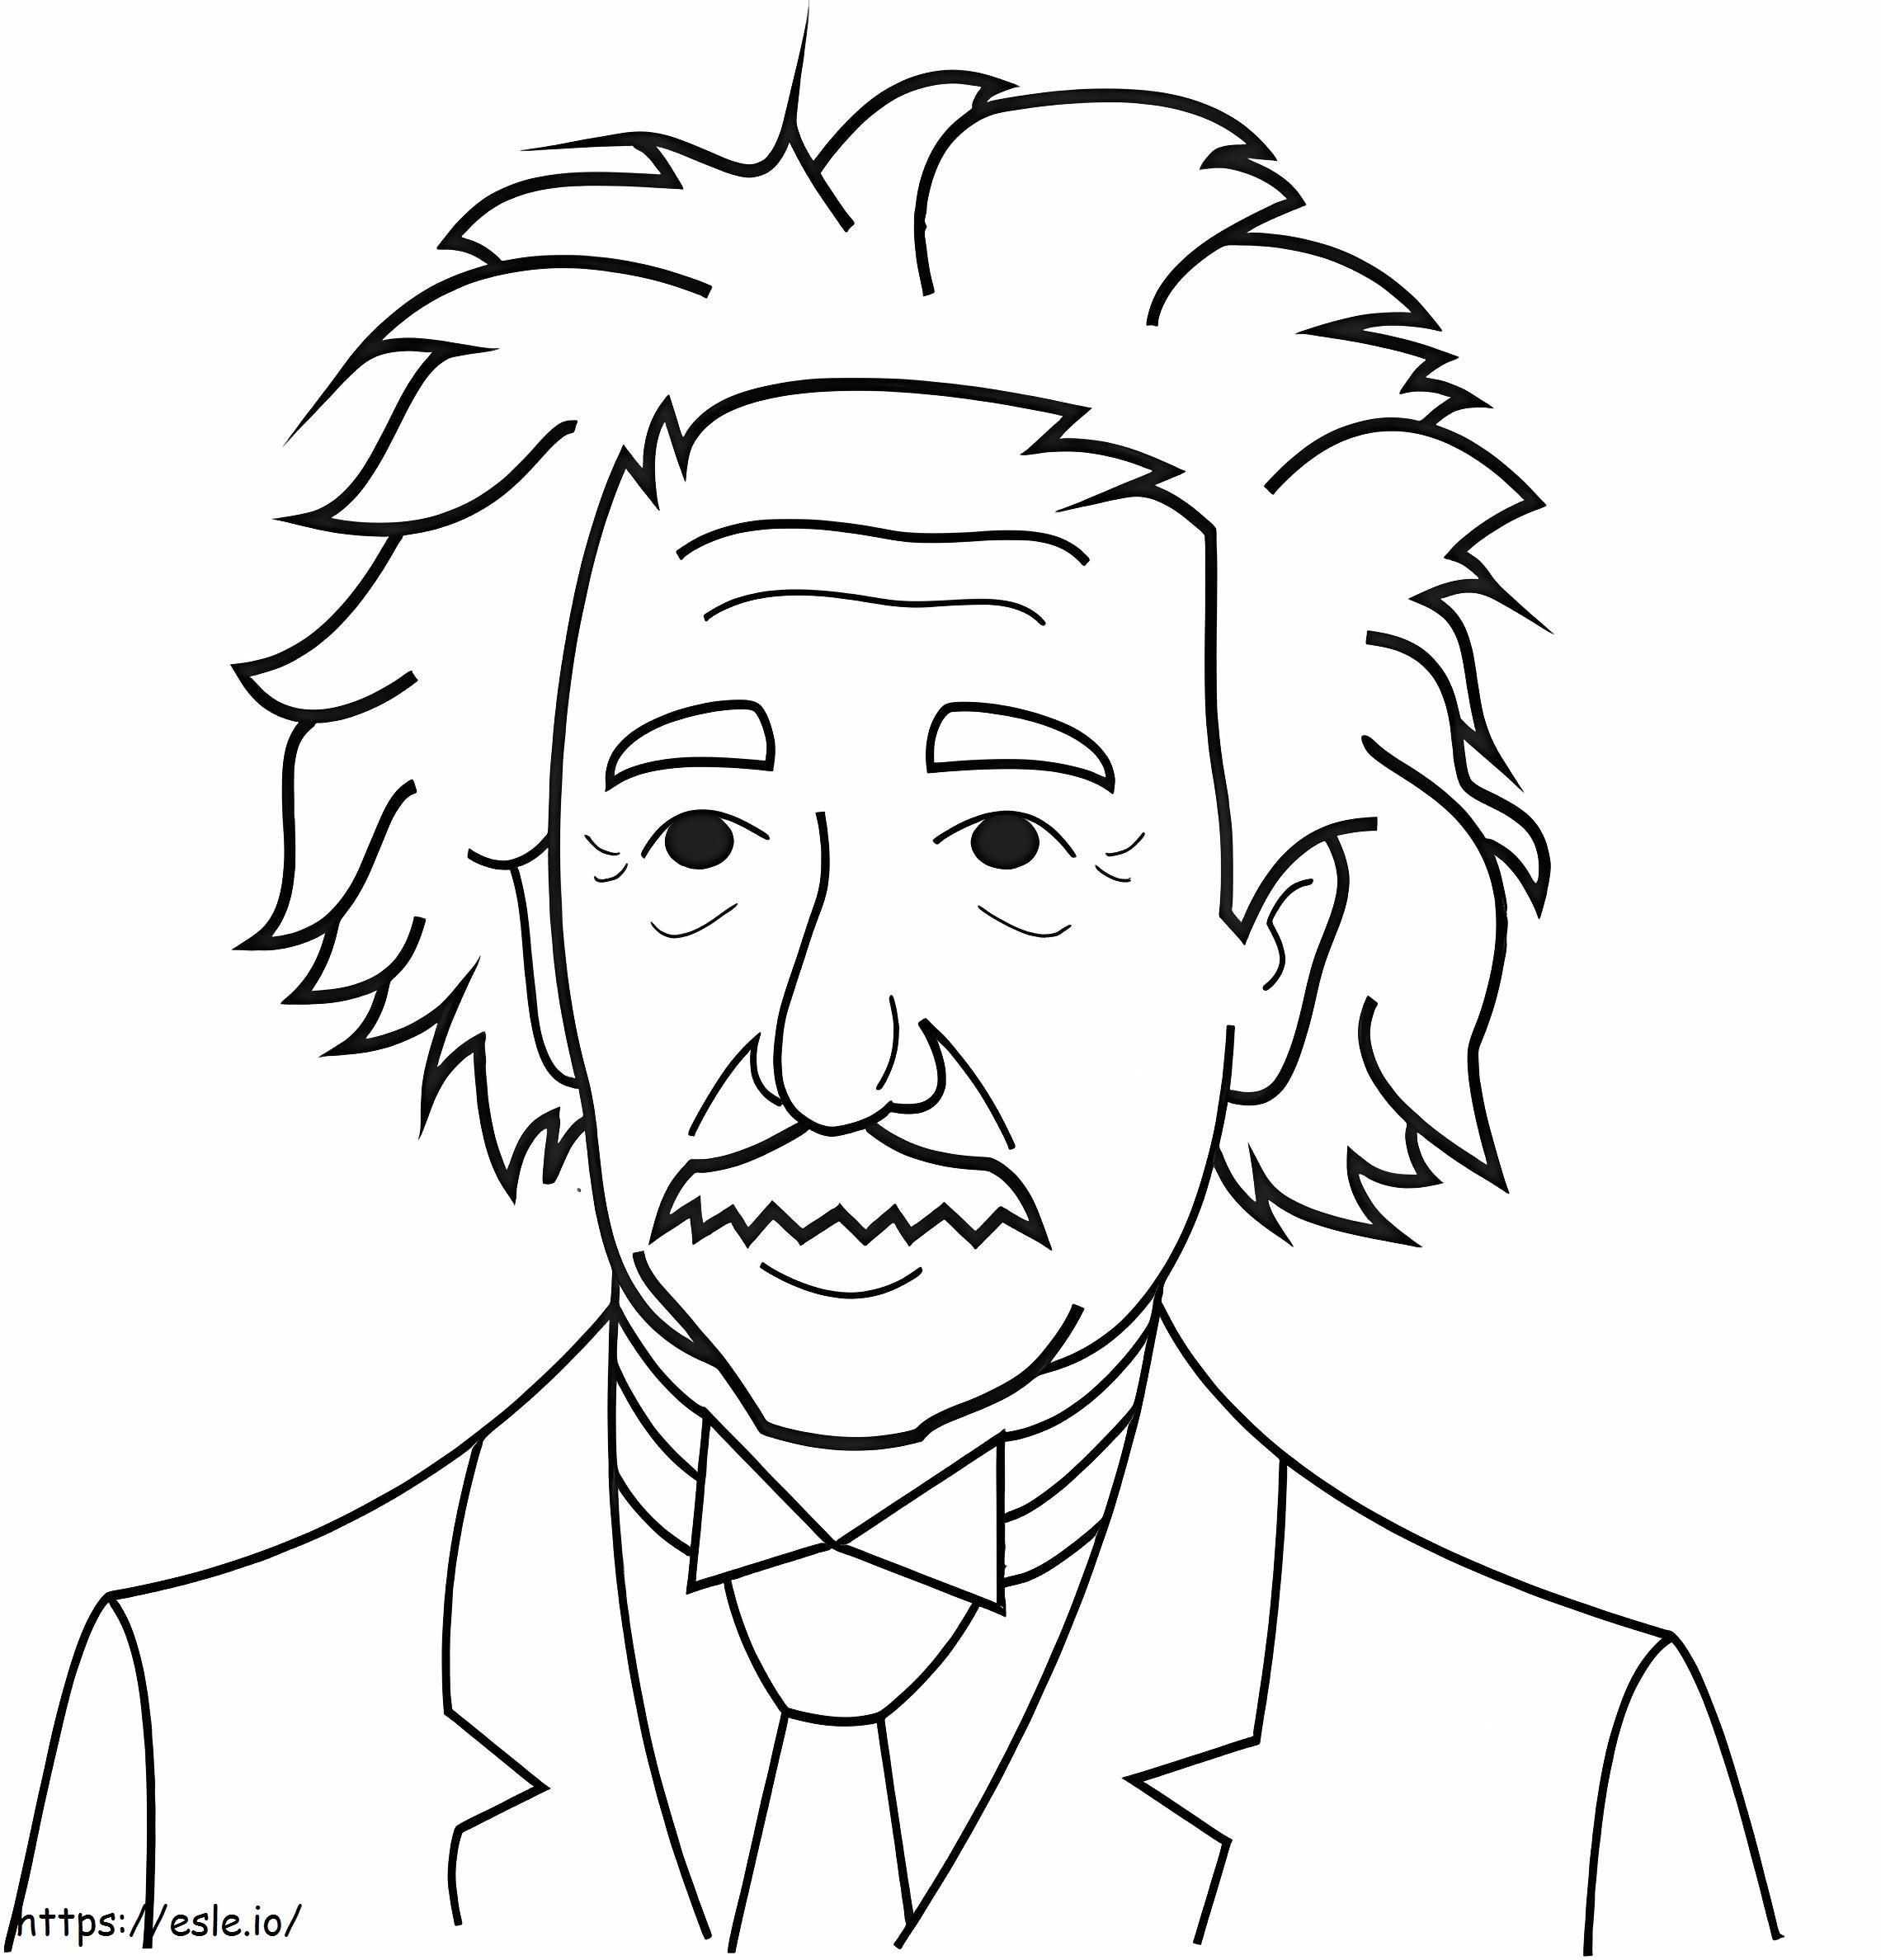 Coloriage Albert Einstein imprimable gratuitement à imprimer dessin